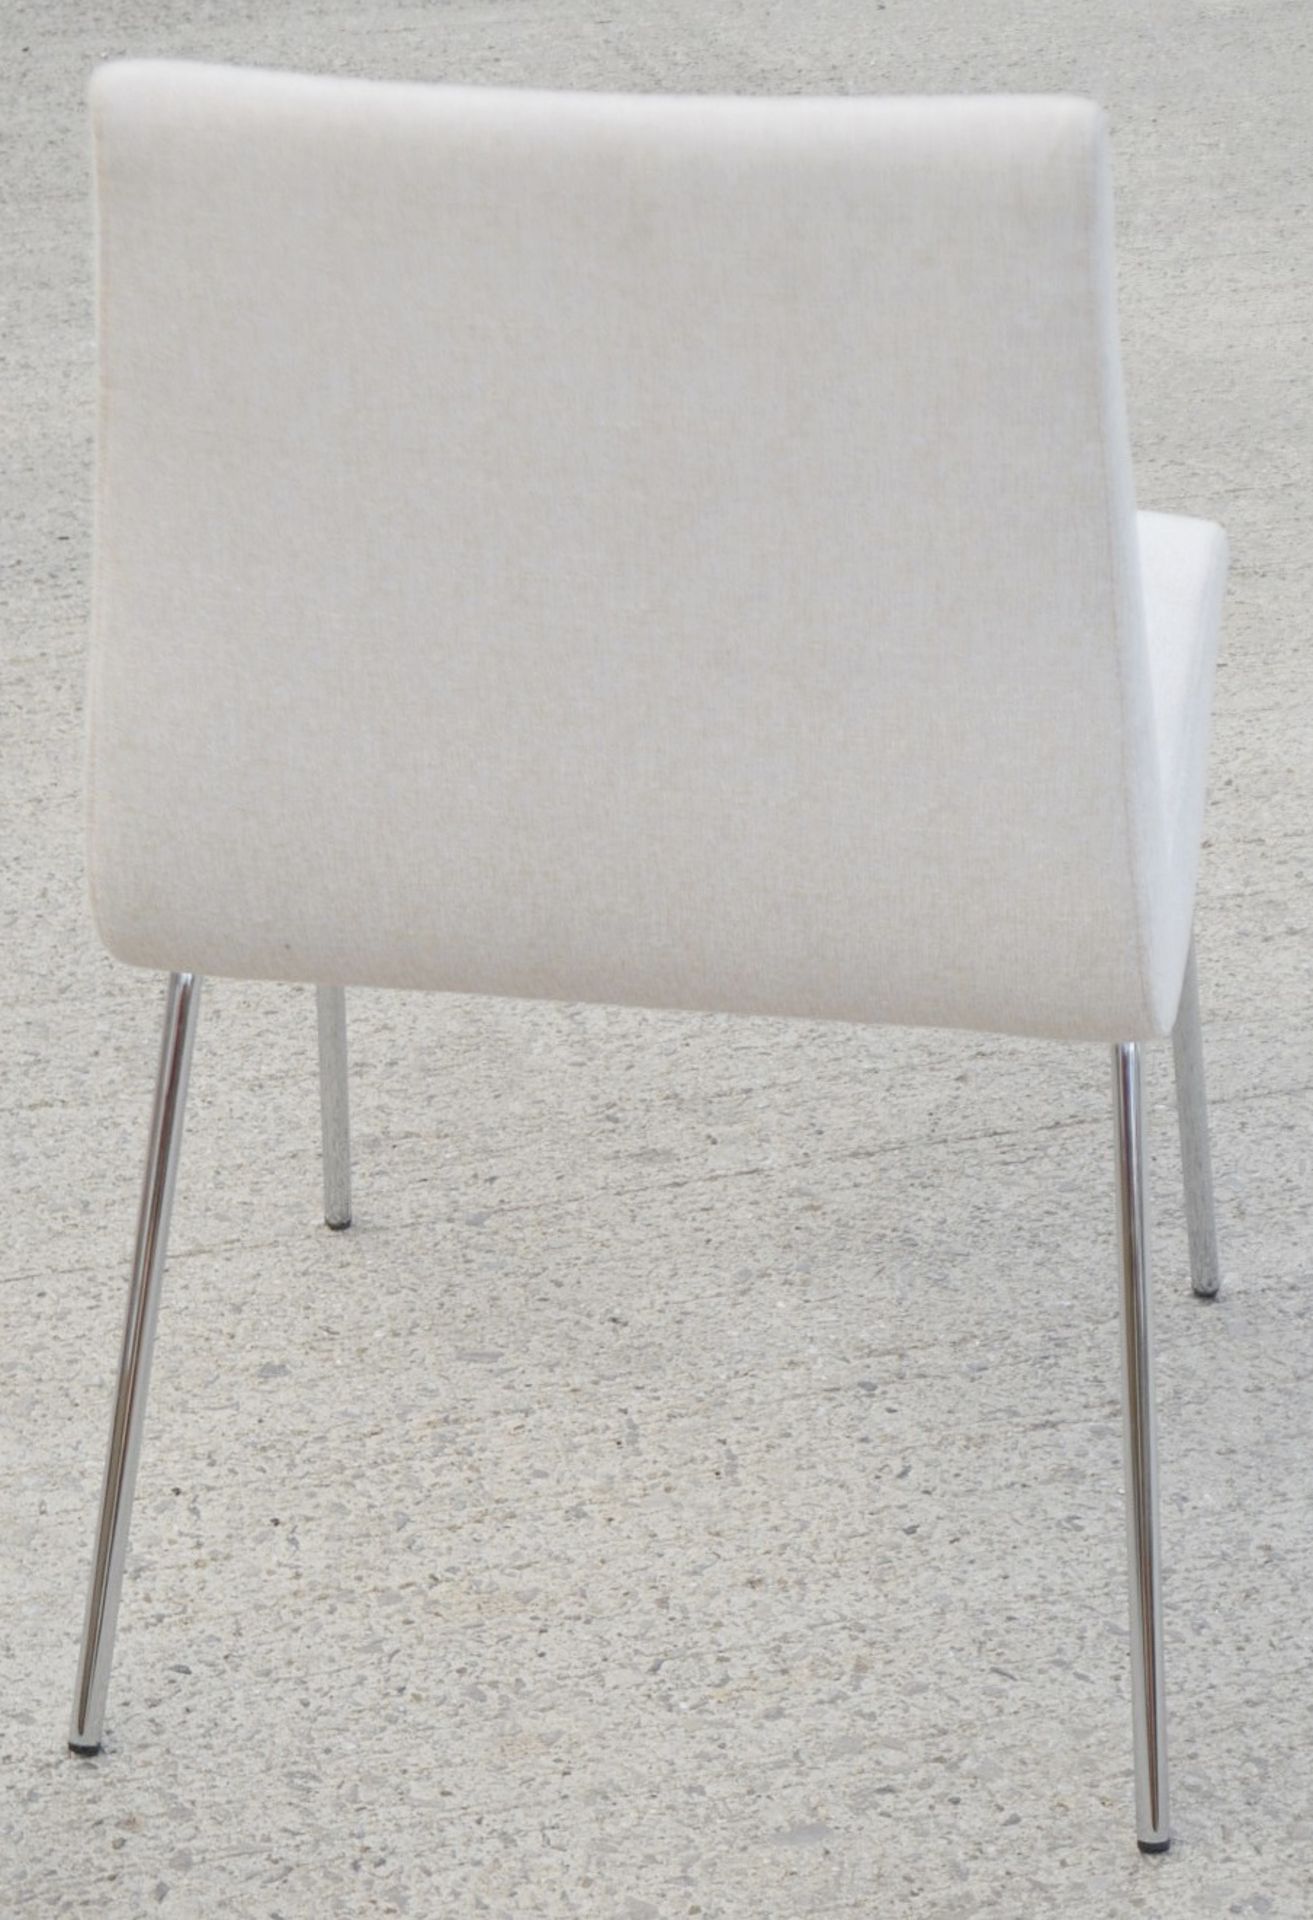 Pair Of LIGNE ROSET 'TV' Designer Dining Chairs In A Light Neutral Beige Fabric & Chromed Steel Legs - Image 5 of 9